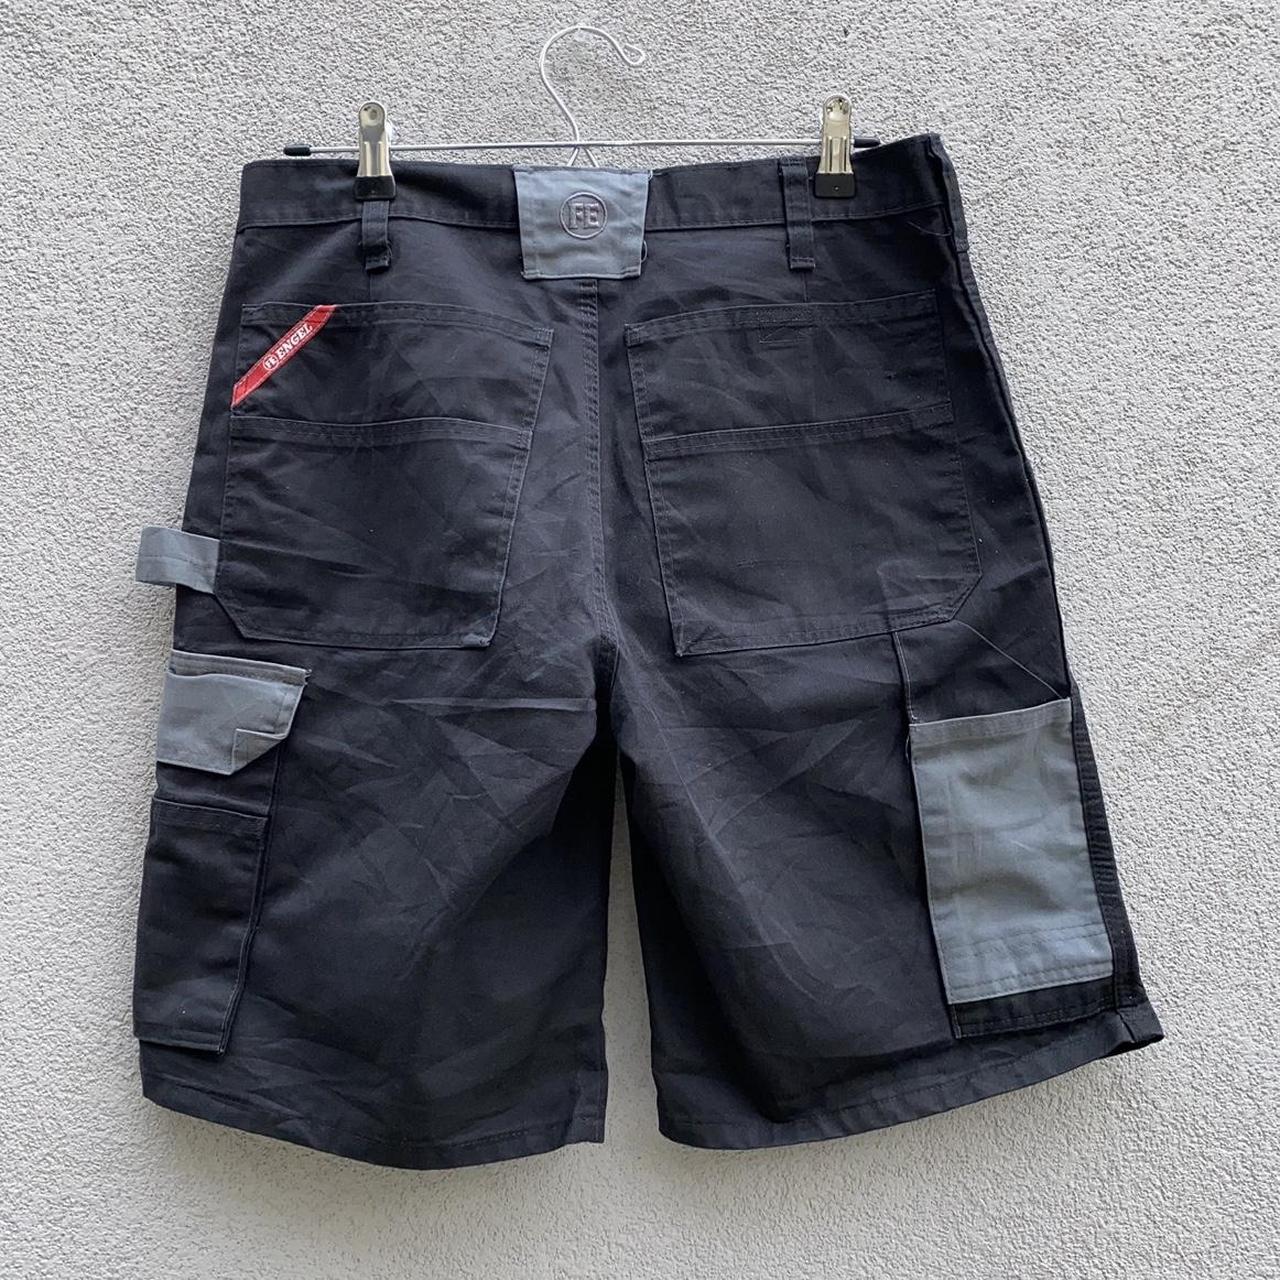 Black and grey utility cargo shorts - Depop